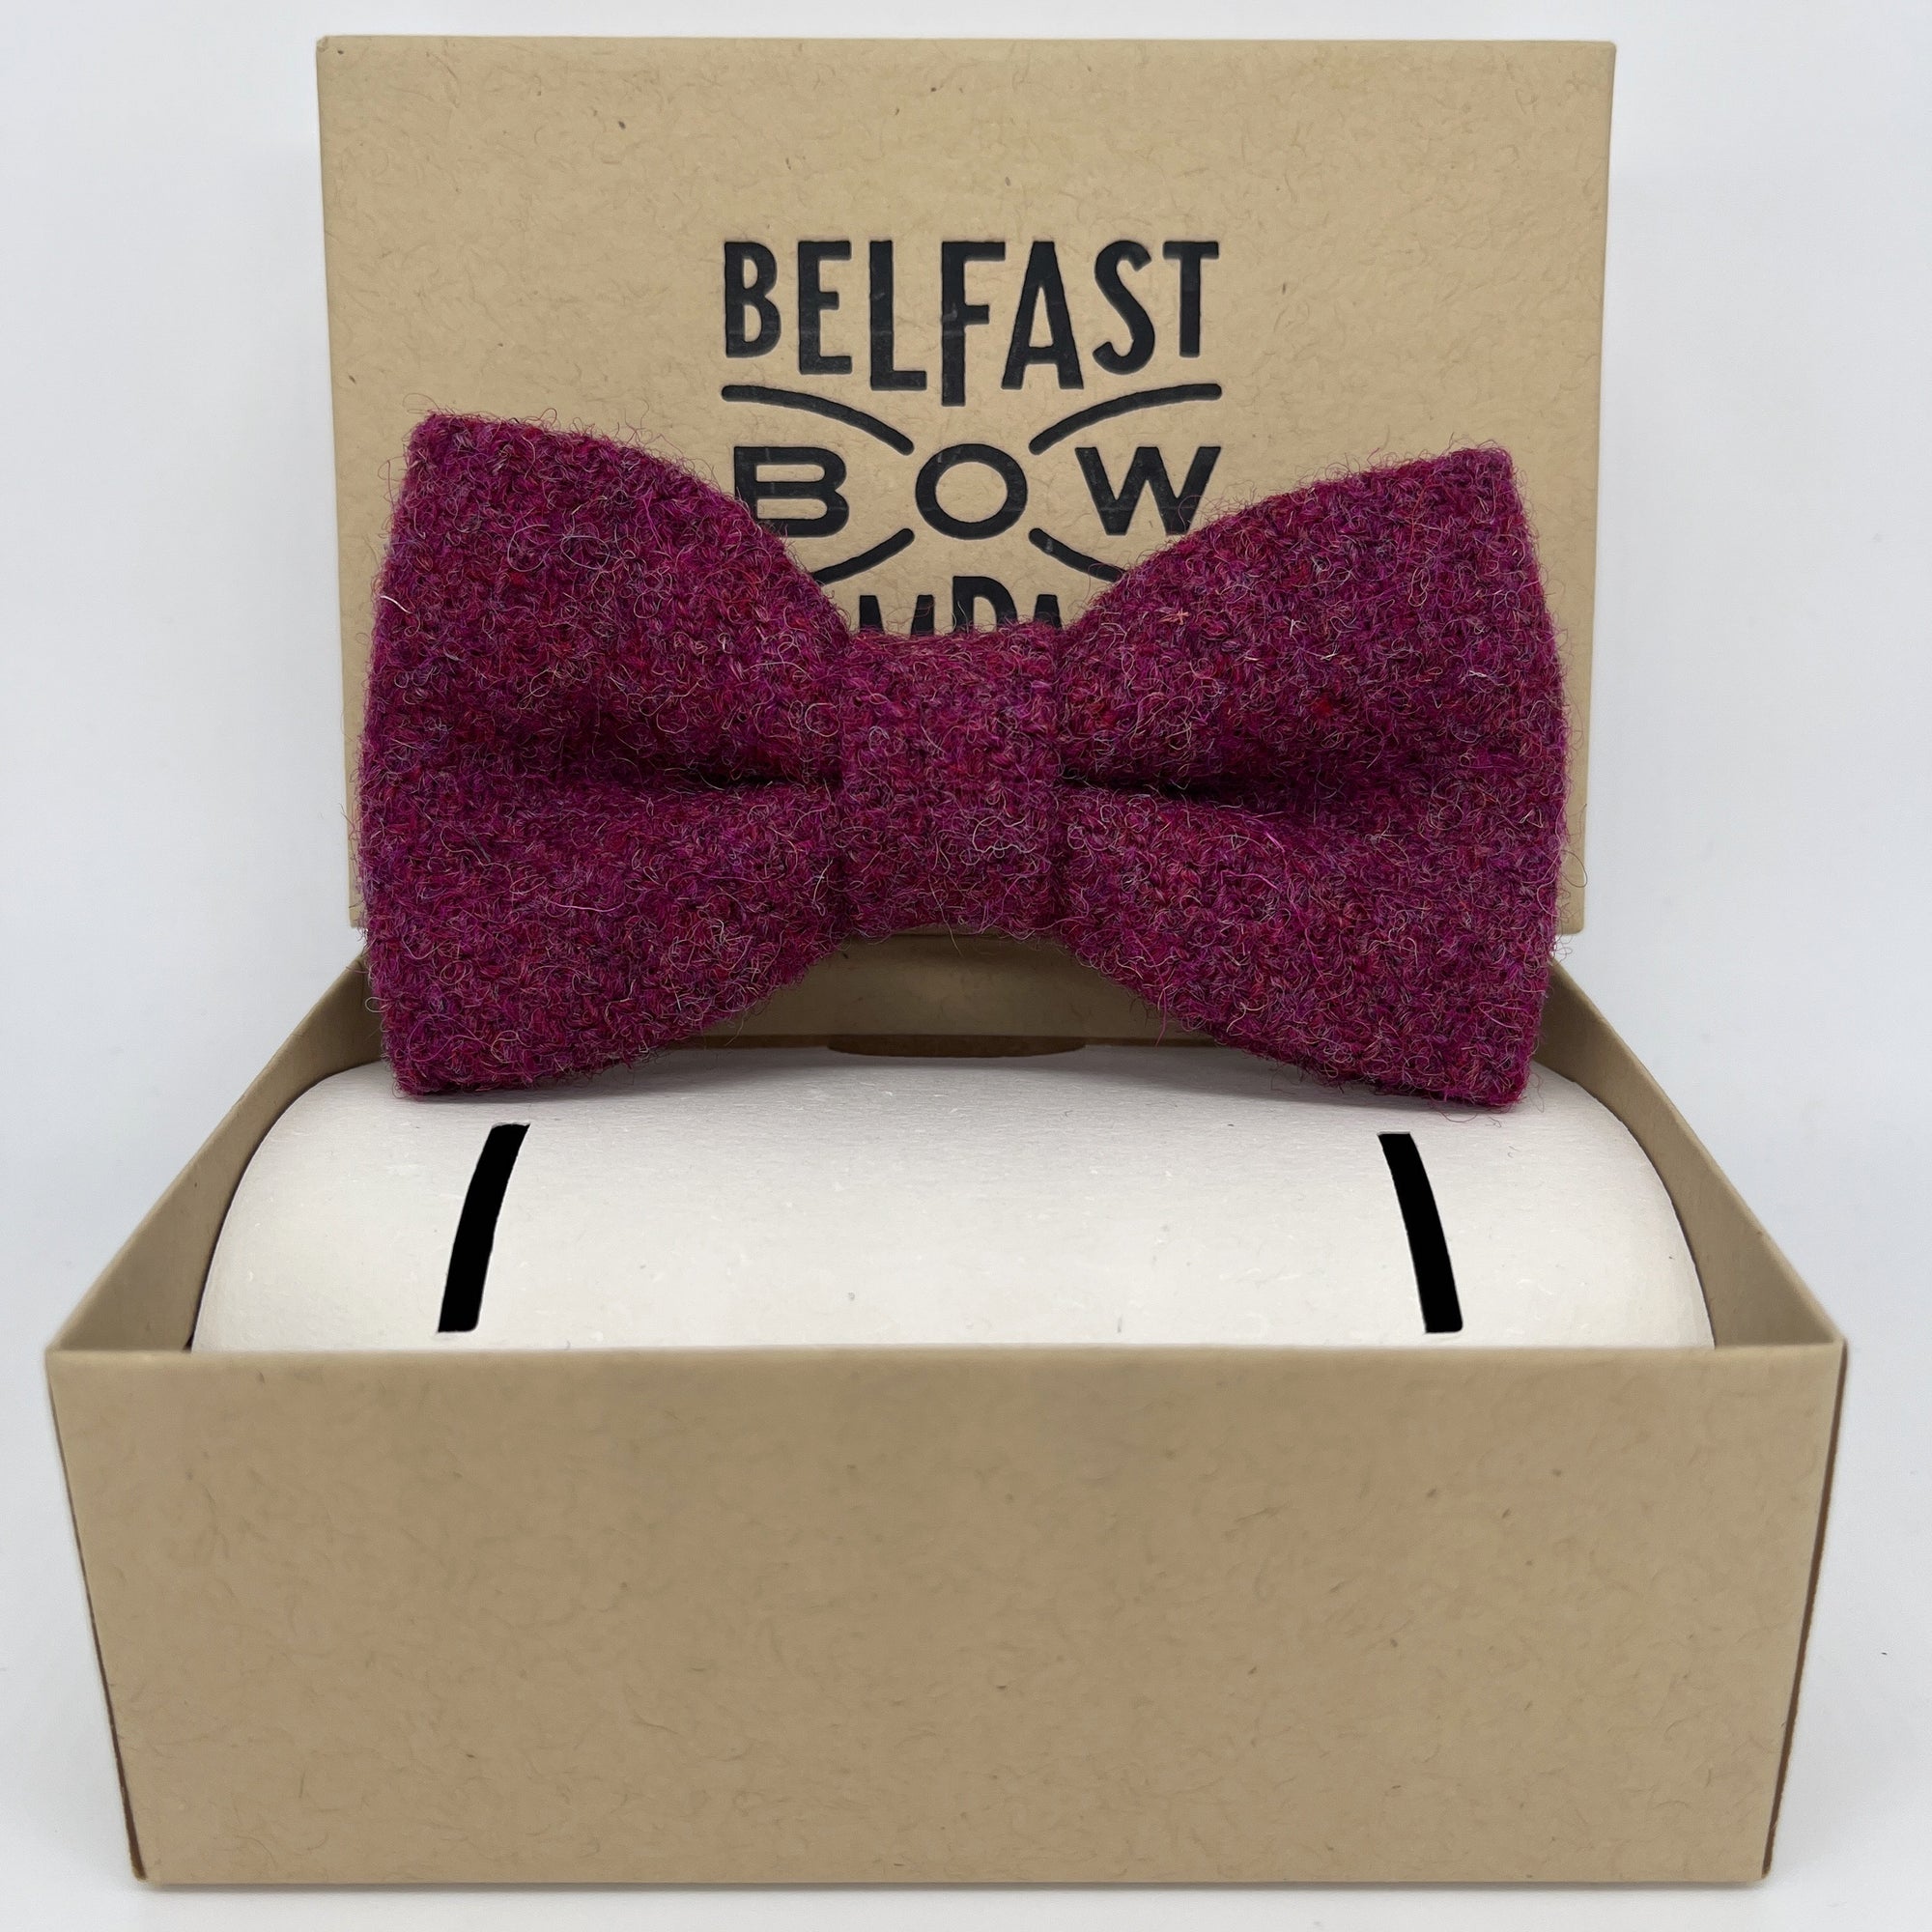 Harris Tweed Bow Tie in Raspberry Burgundy by the Belfast Bow Company